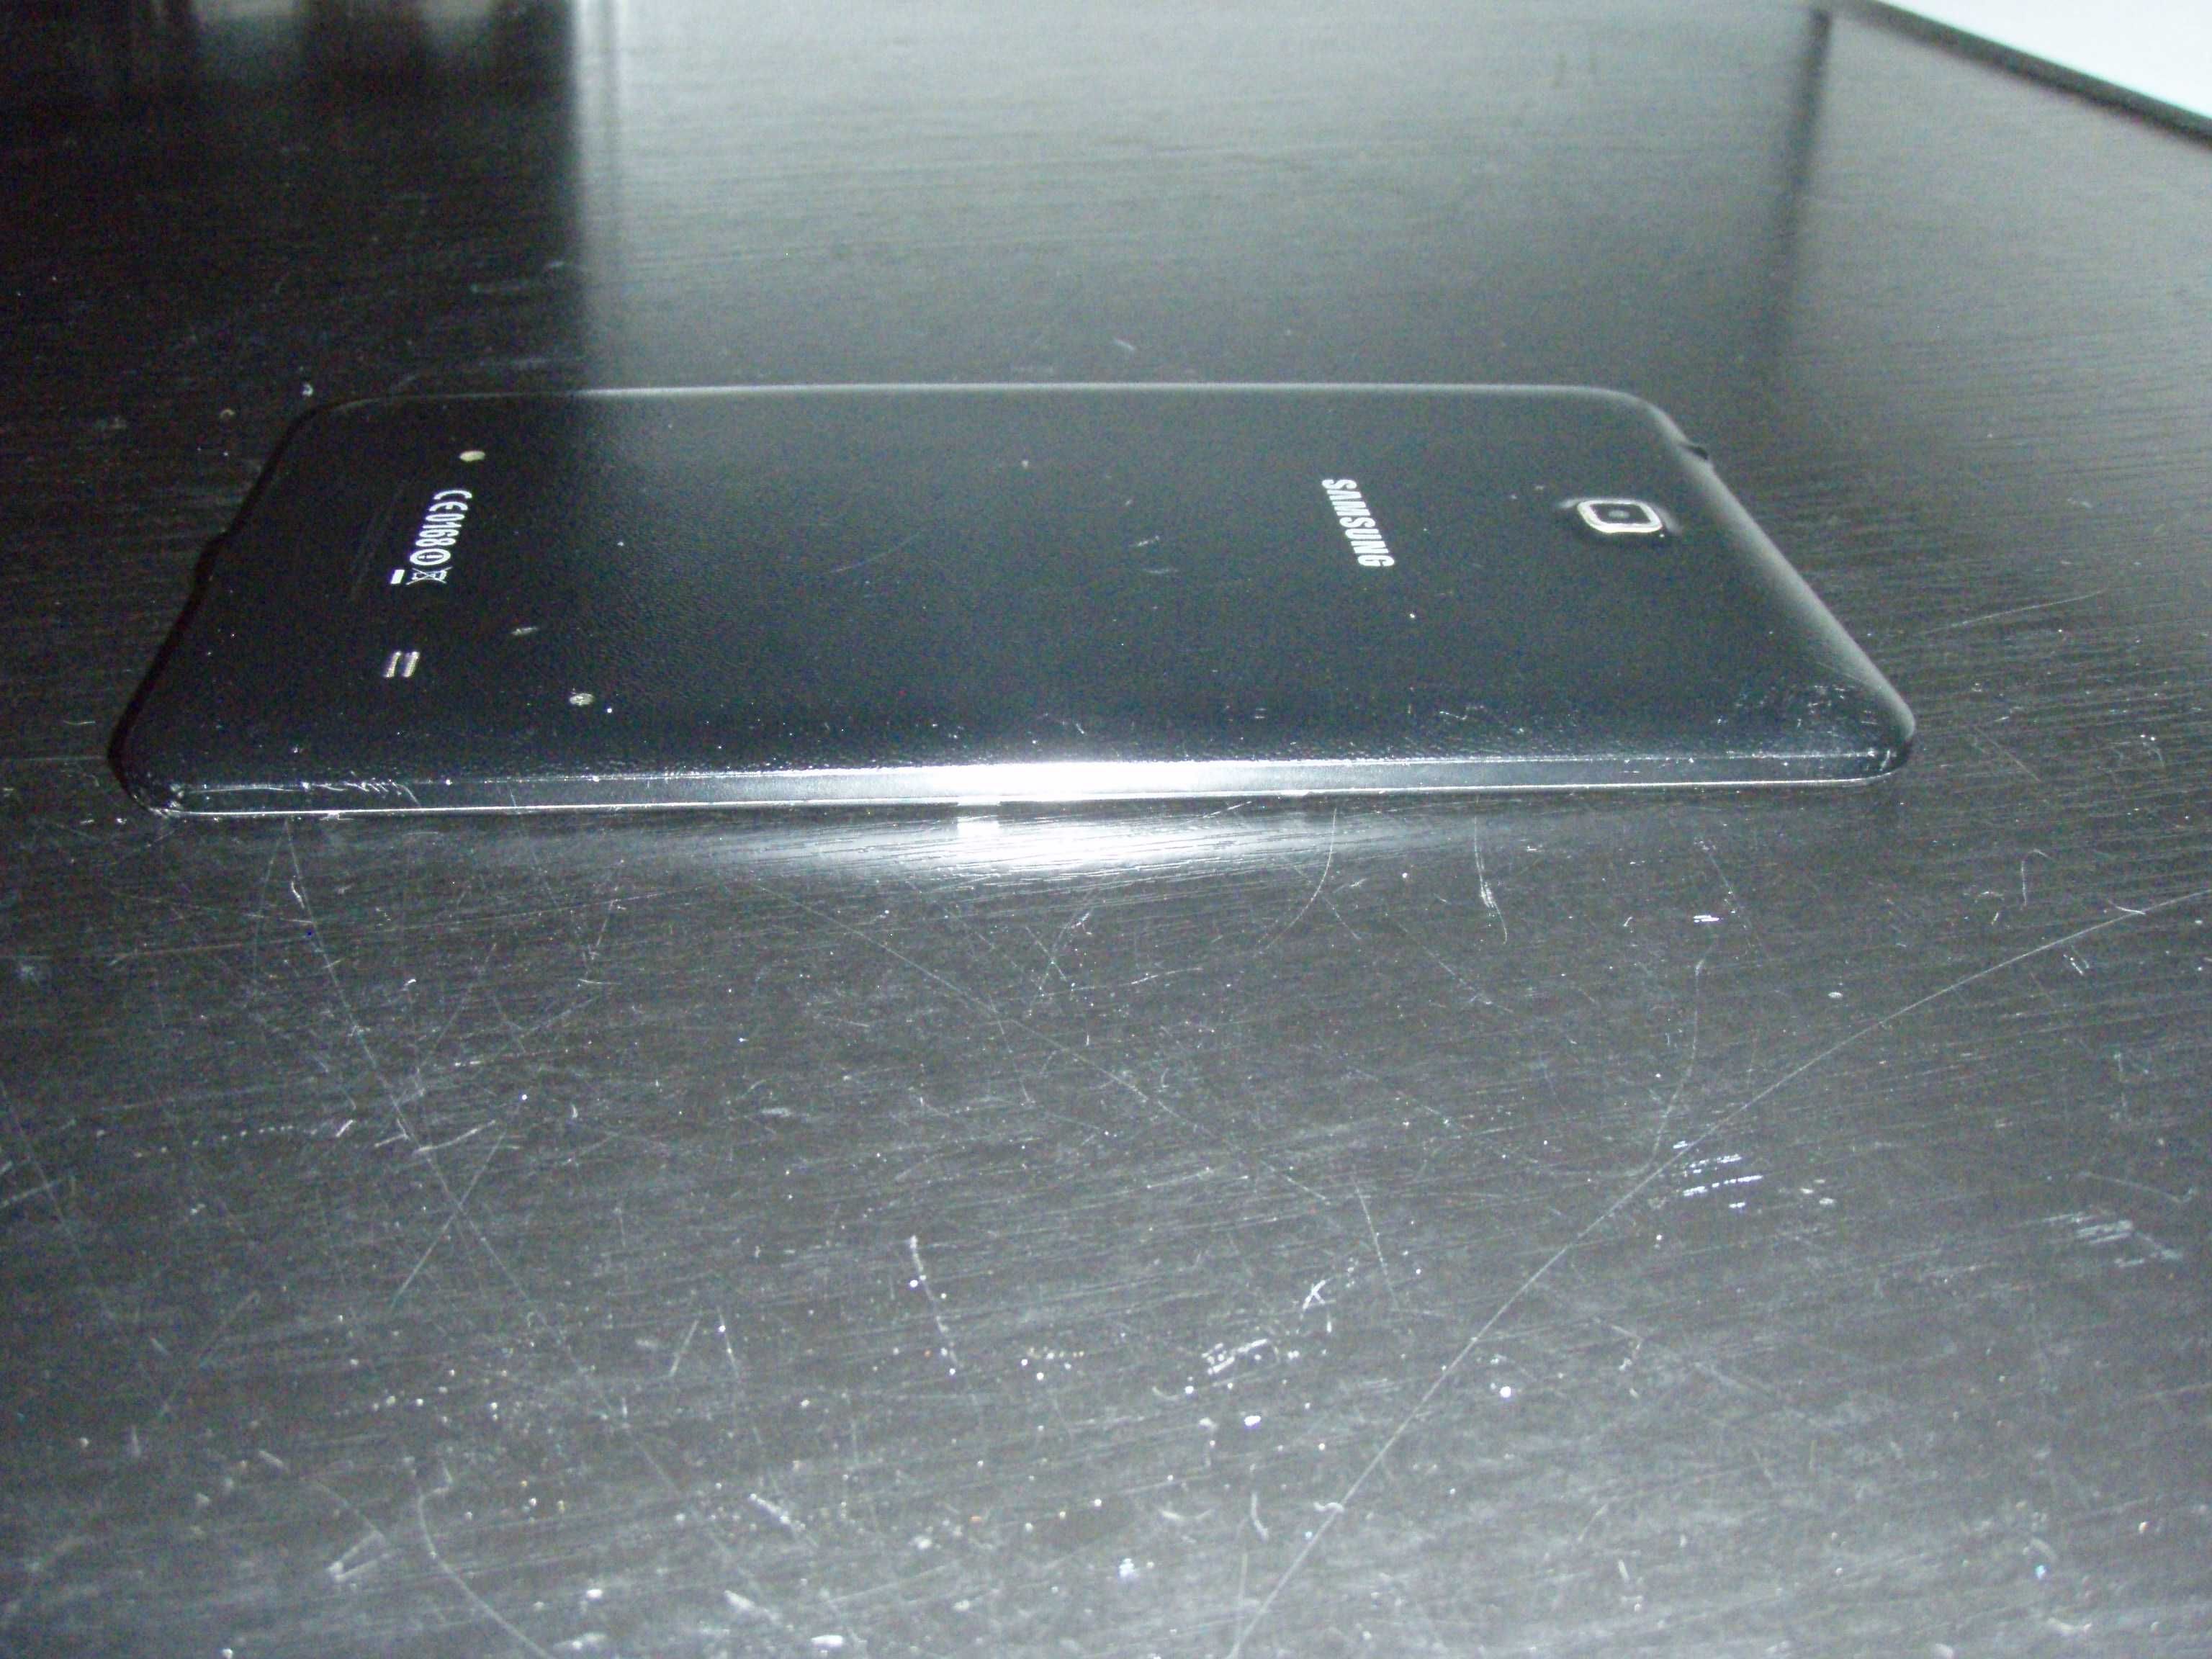 Tableta Samsung Galaxy TAB 4 (SM-T335) 4G LTE 16GB